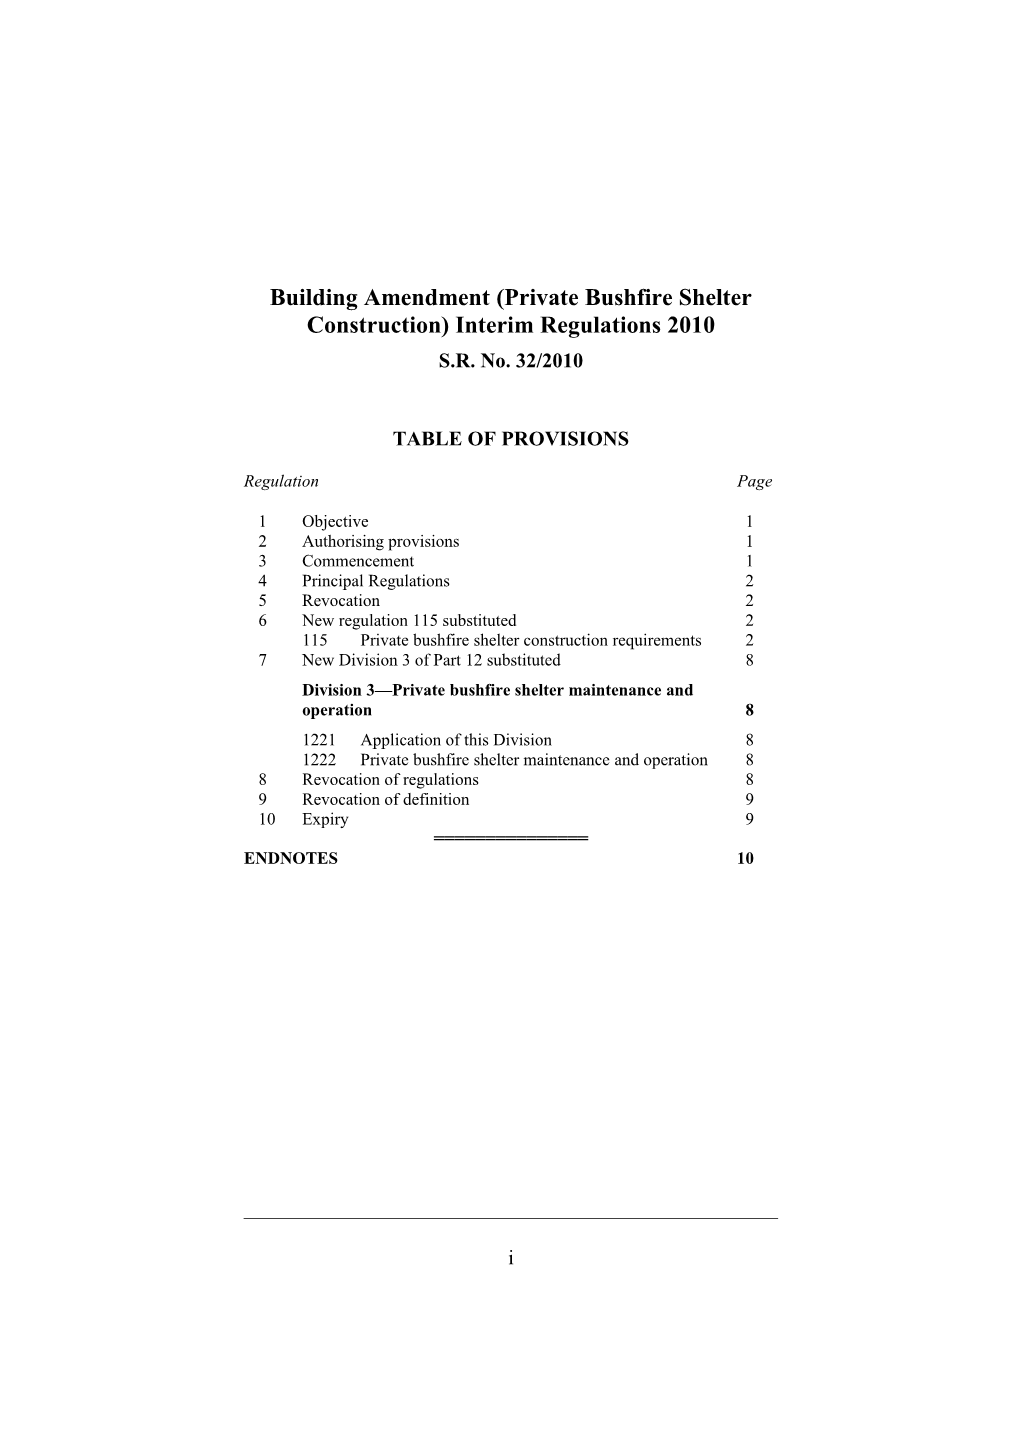 Building Amendment (Private Bushfire Shelter Construction) Interim Regulations 2010